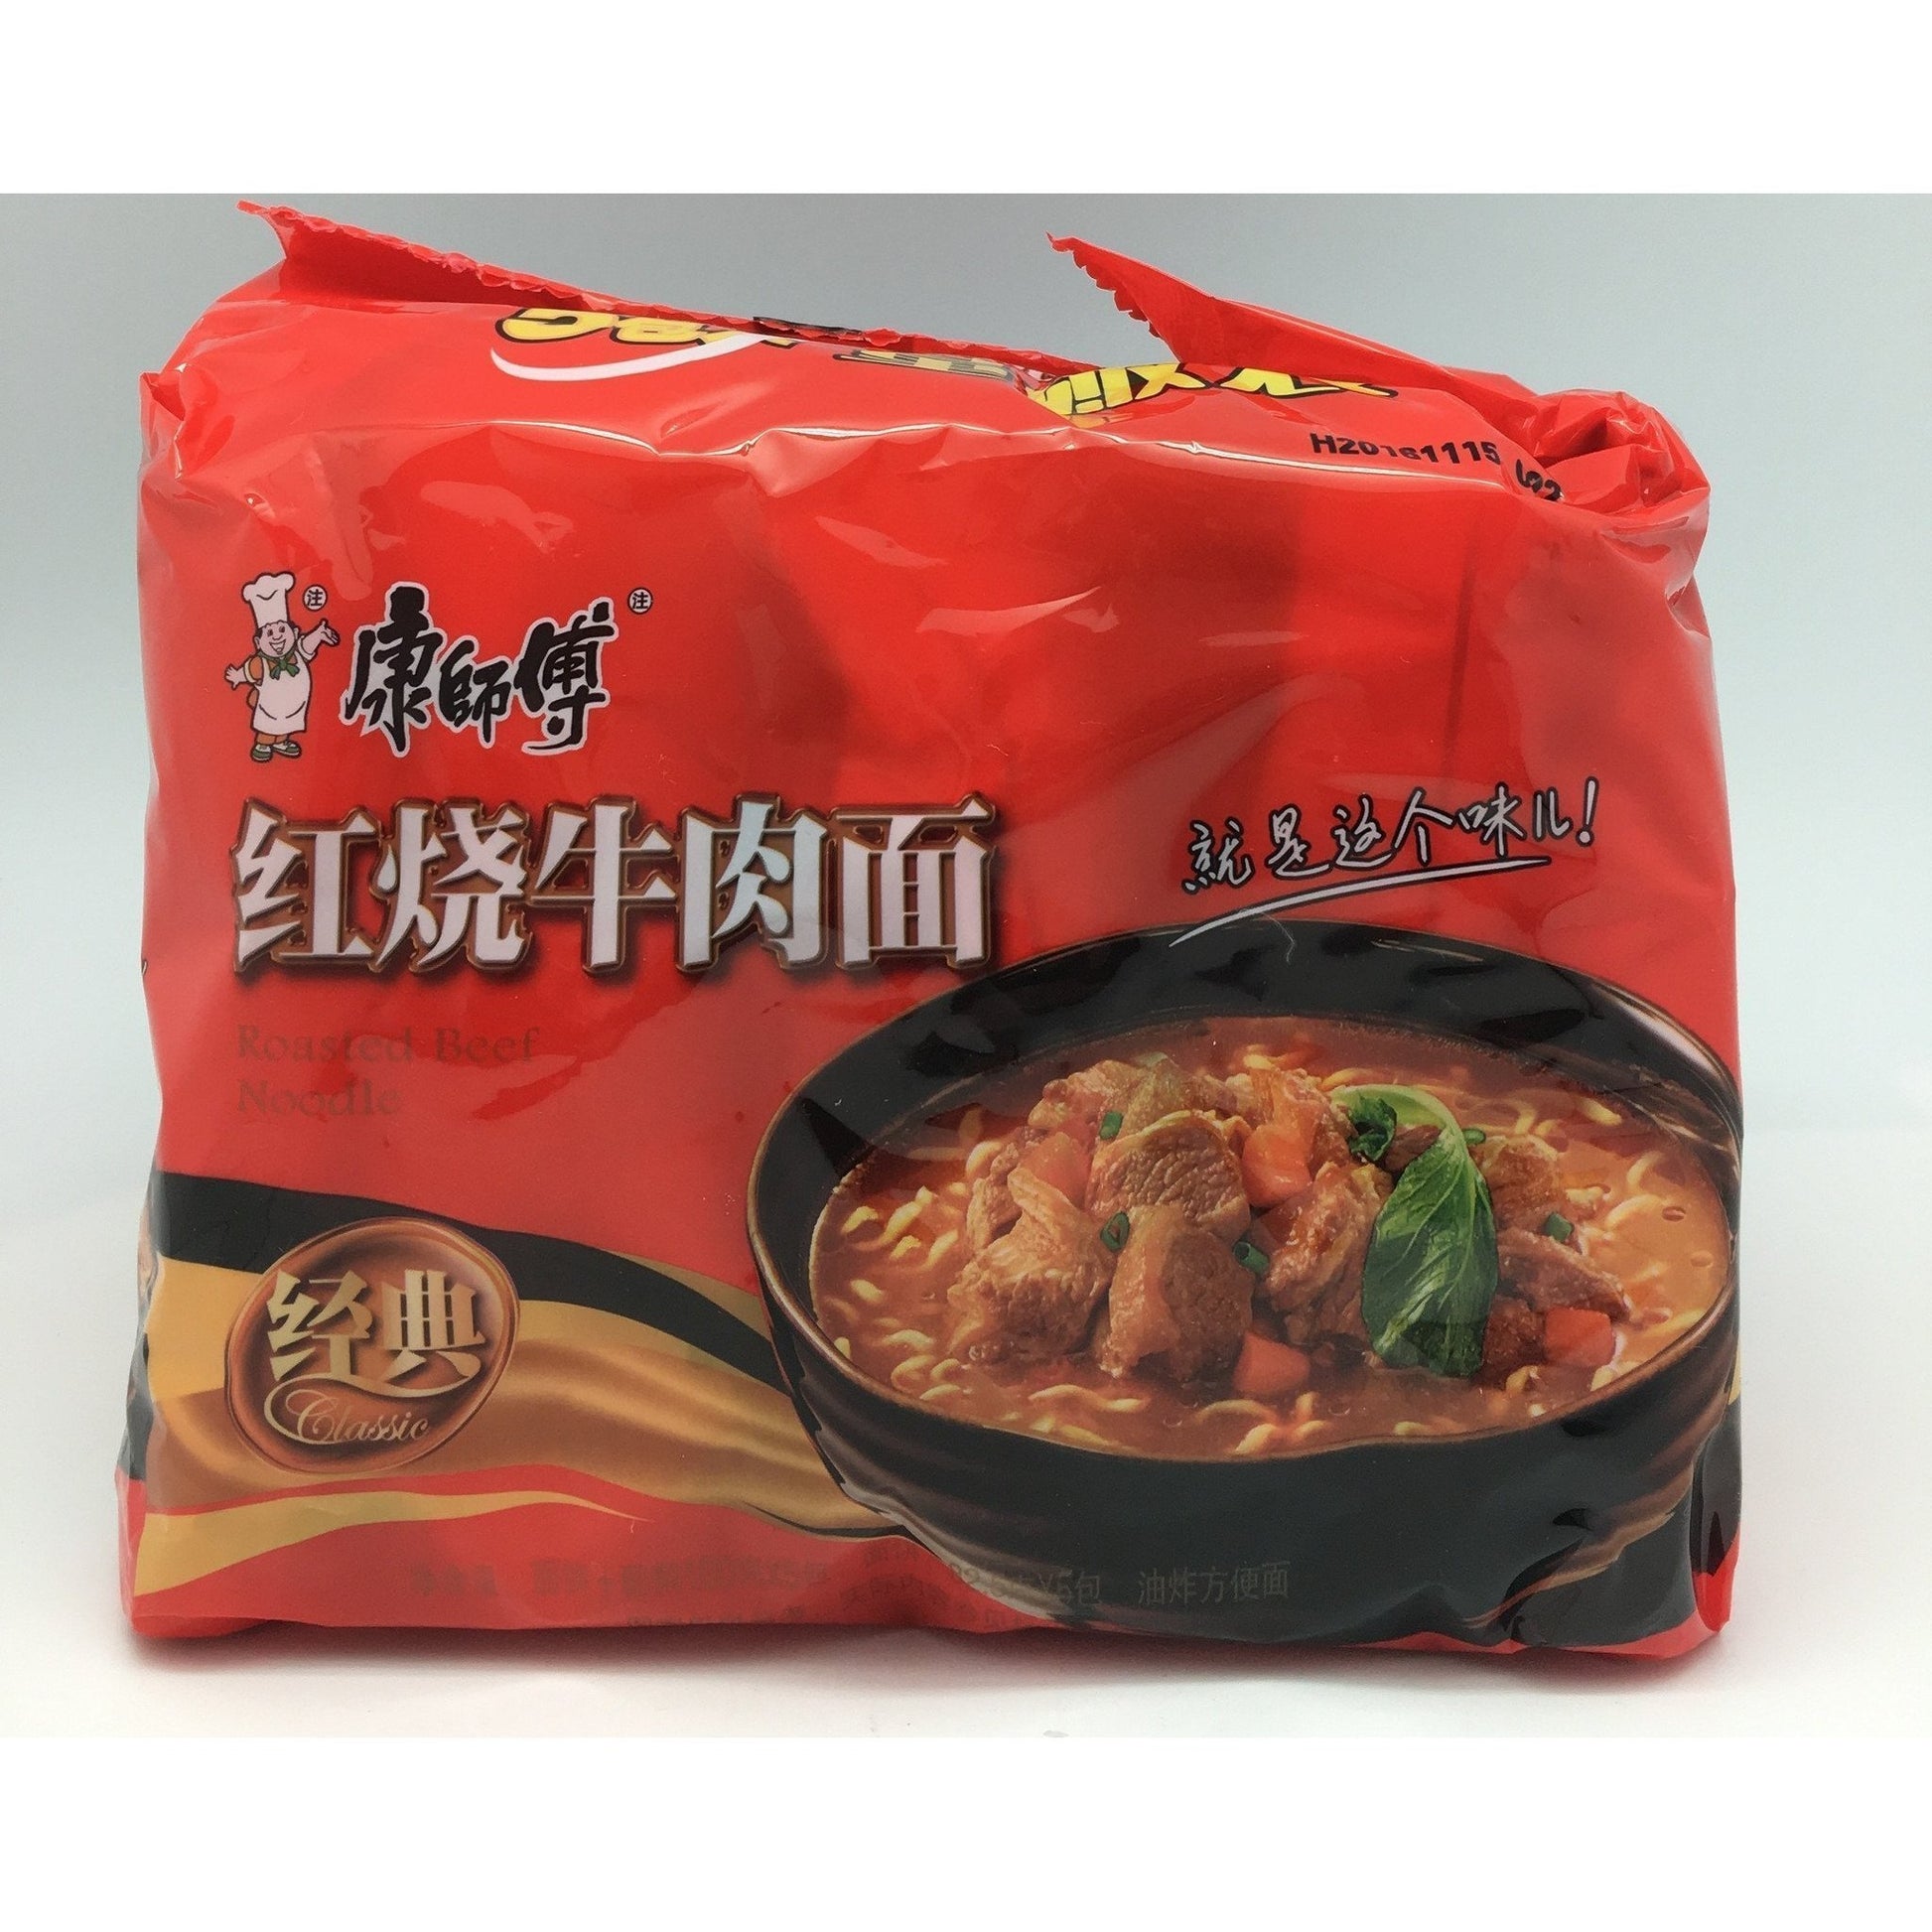 N002CR Kon Brand - Instant Ramen Noodle X 5pk - 30pkt  /1CTN - New Eastland Pty Ltd - Asian food wholesalers